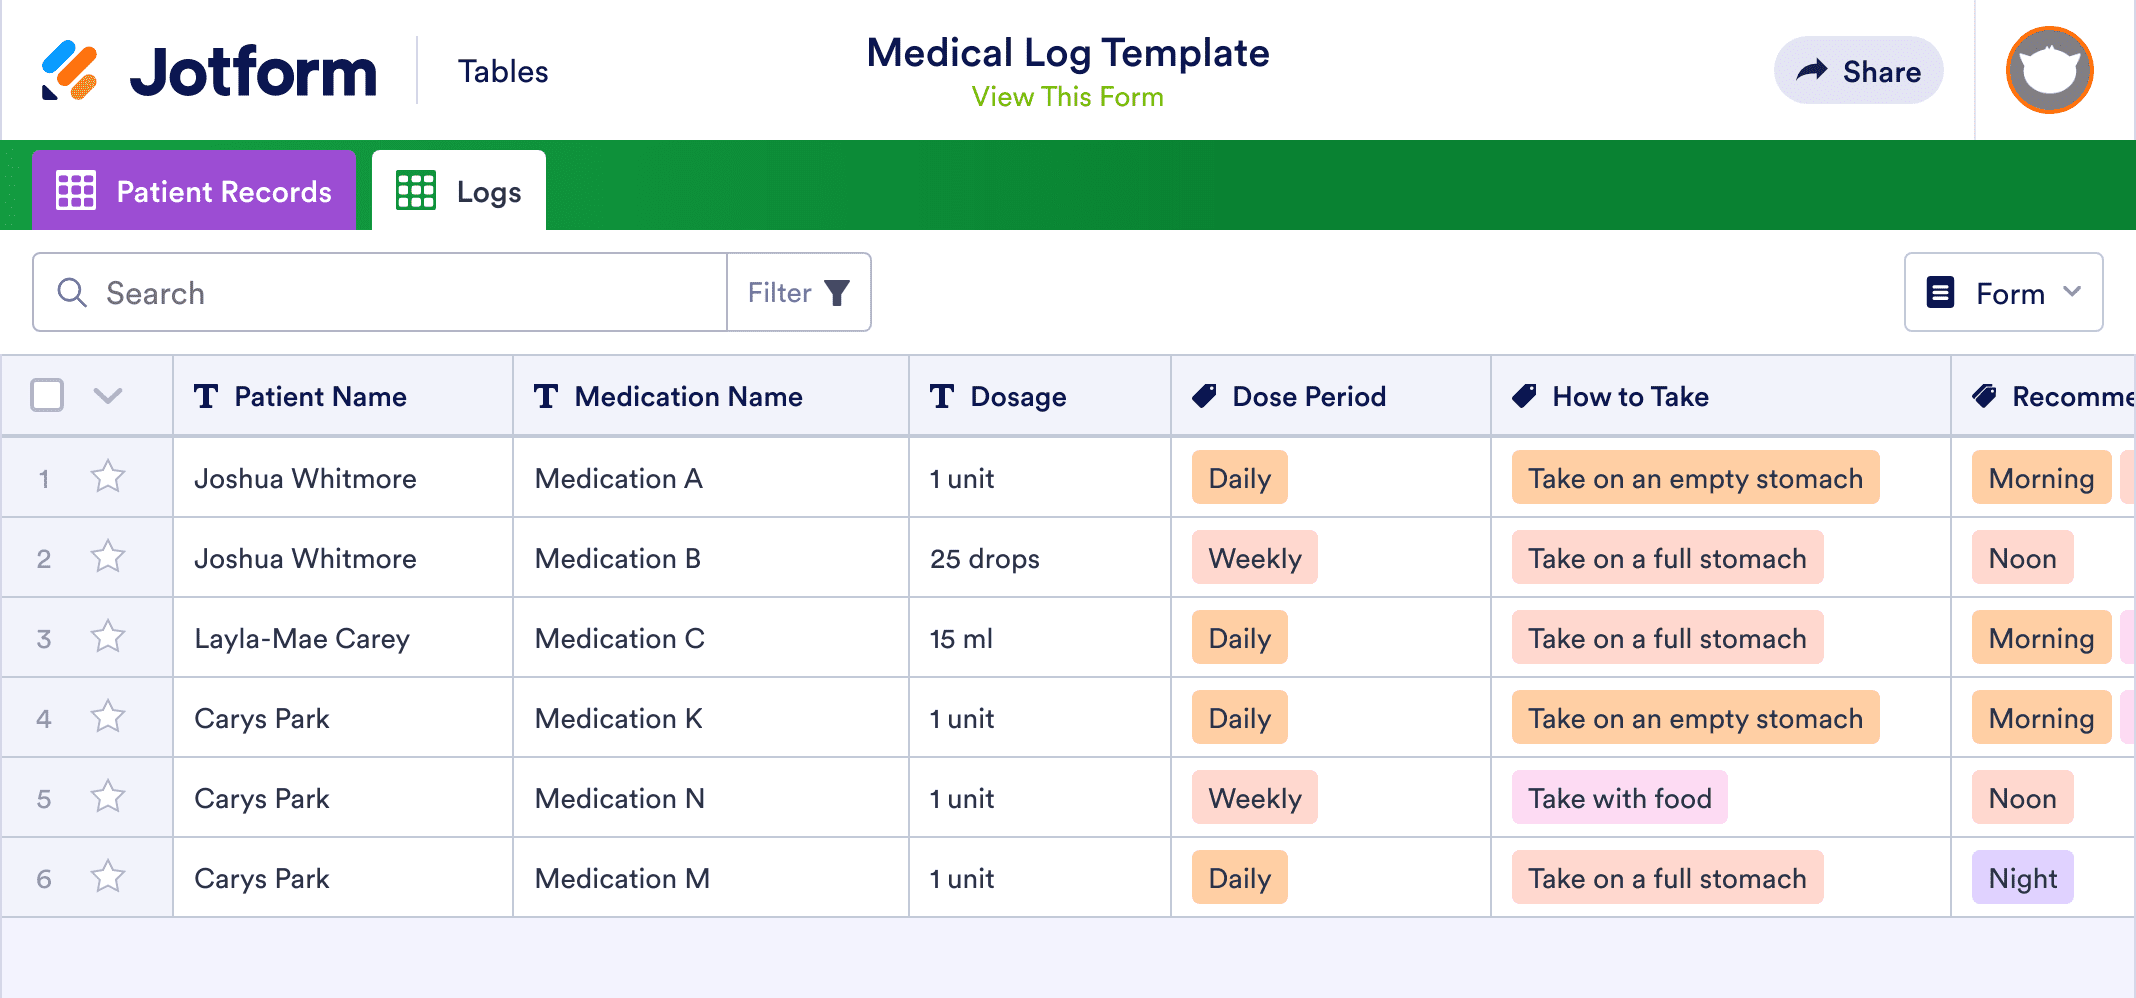 Medical Log Template | Jotform Tables